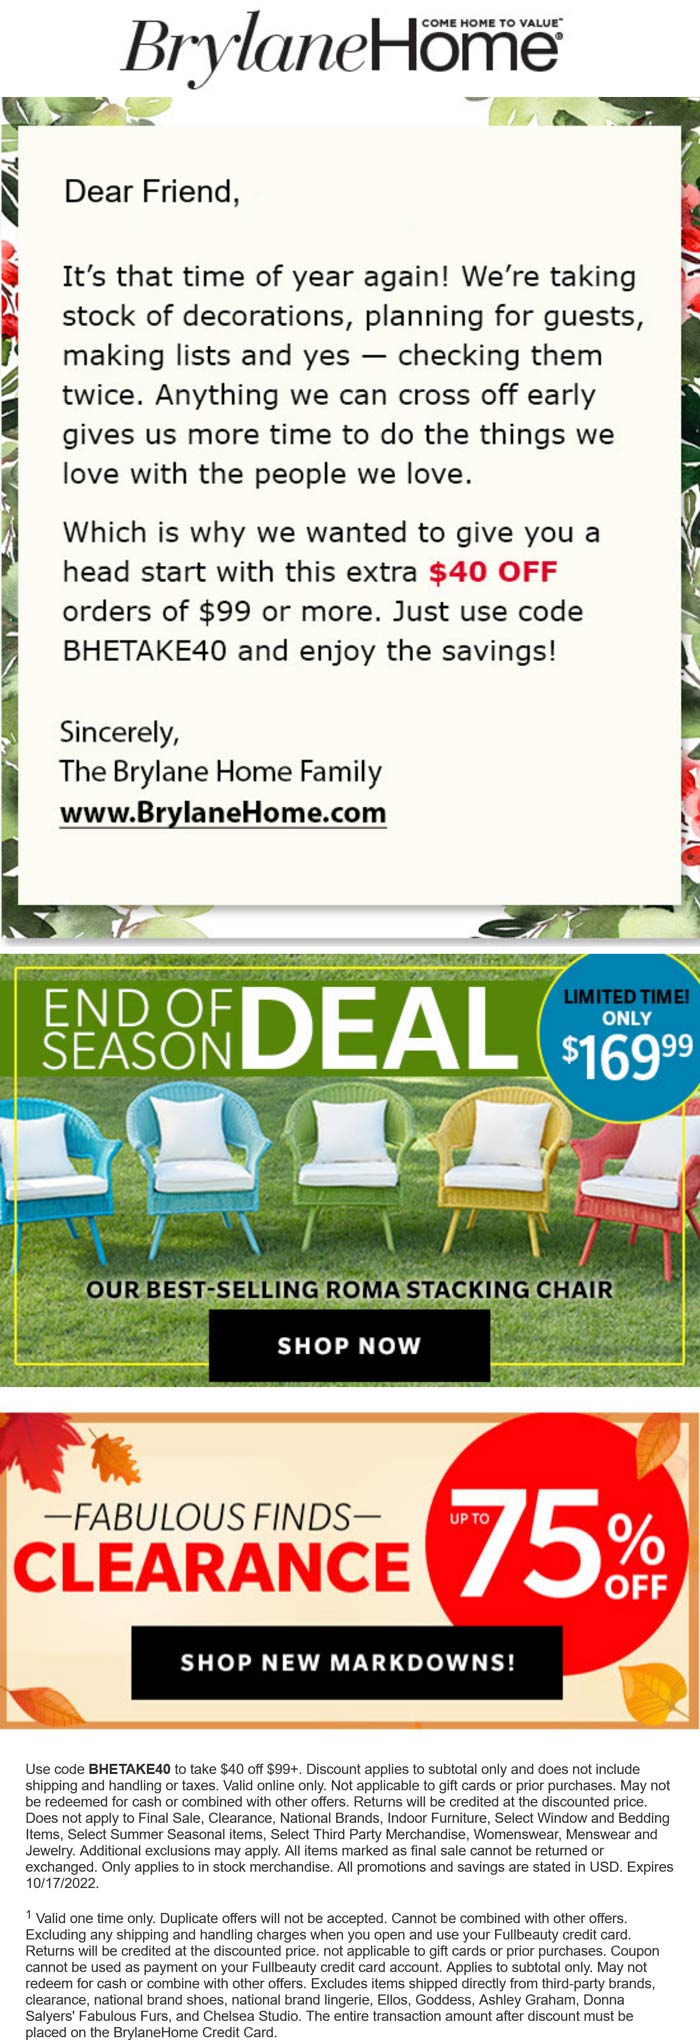 Brylane Home stores Coupon  $40 off $99 at Brylane Home via promo code BHETAKE40 #brylanehome 